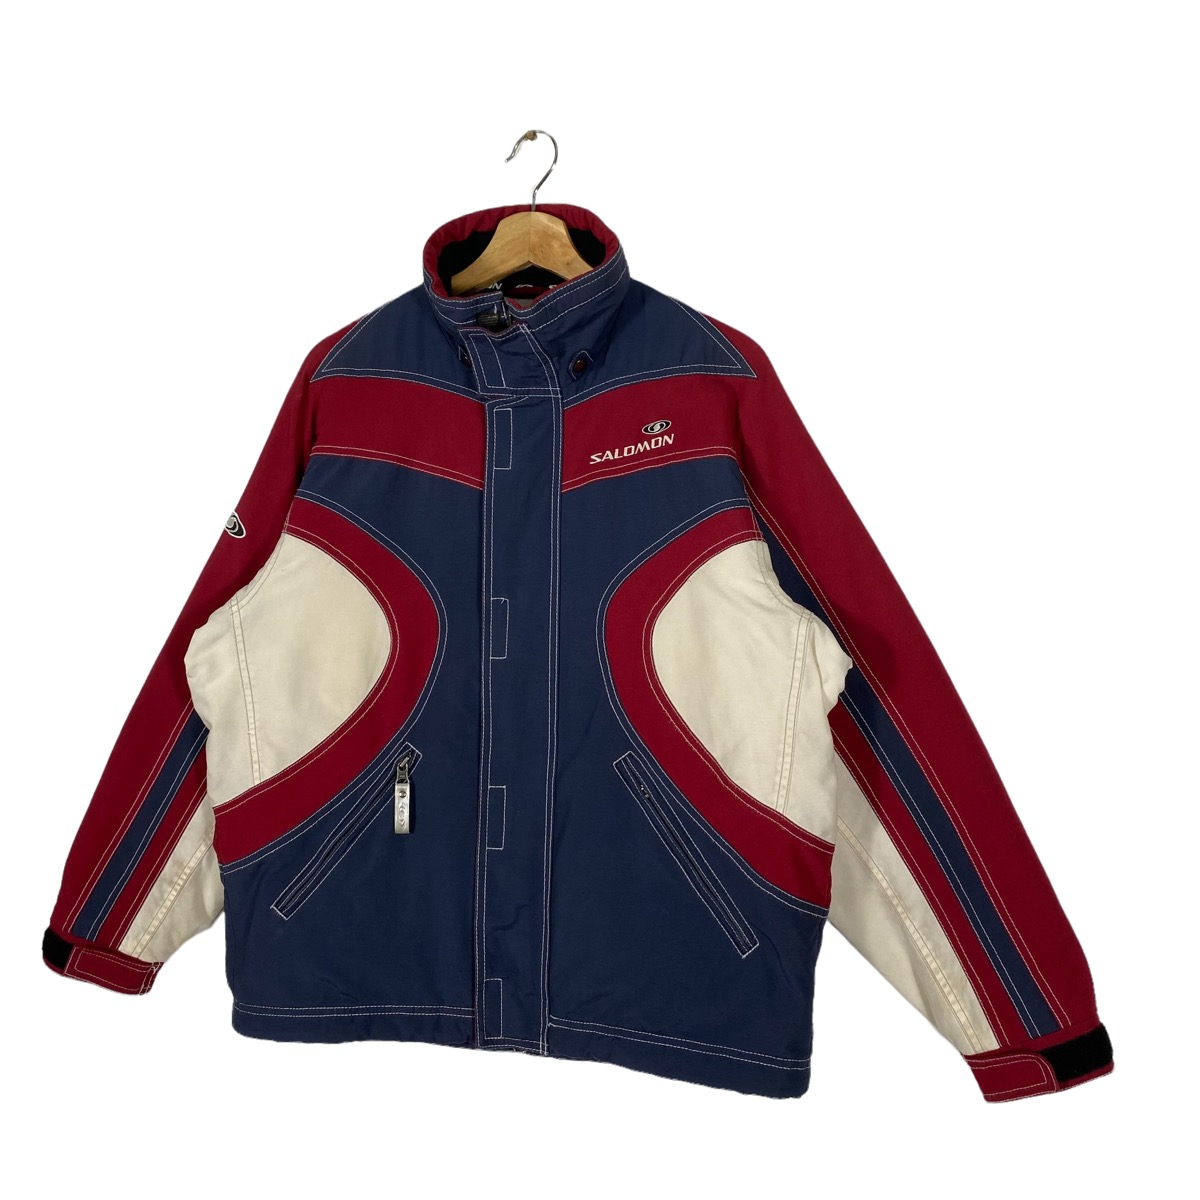 Vintage - Vintage Jacket Salmon S Size But To Fit M Size - 3